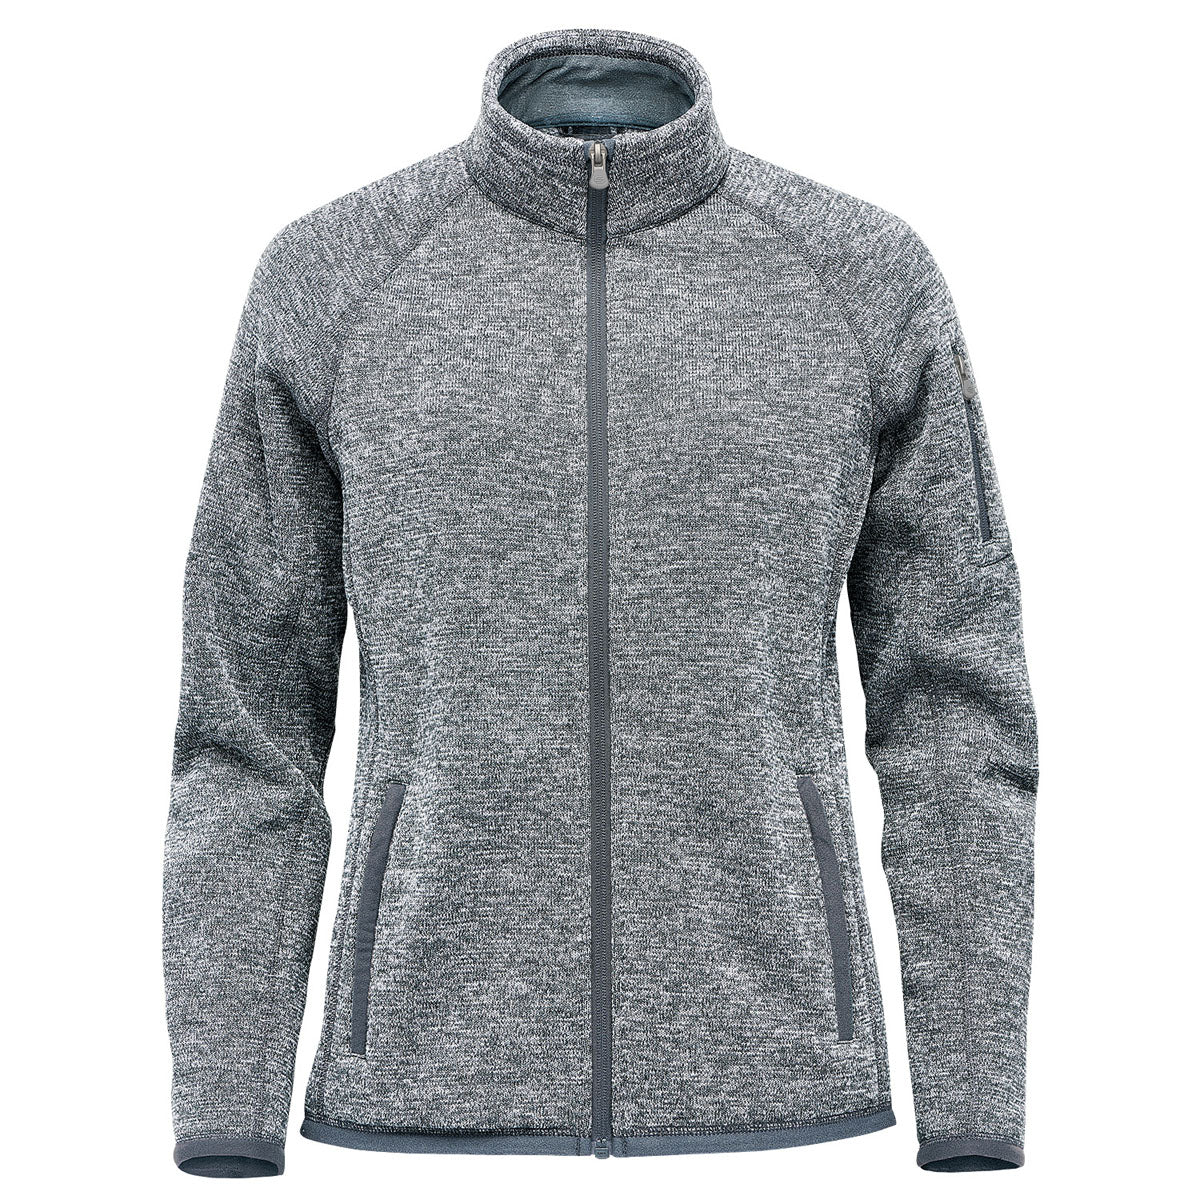 Avalanche Wear Blue Gray Fleece Zip Up Jacket Women's Size XL - beyond  exchange